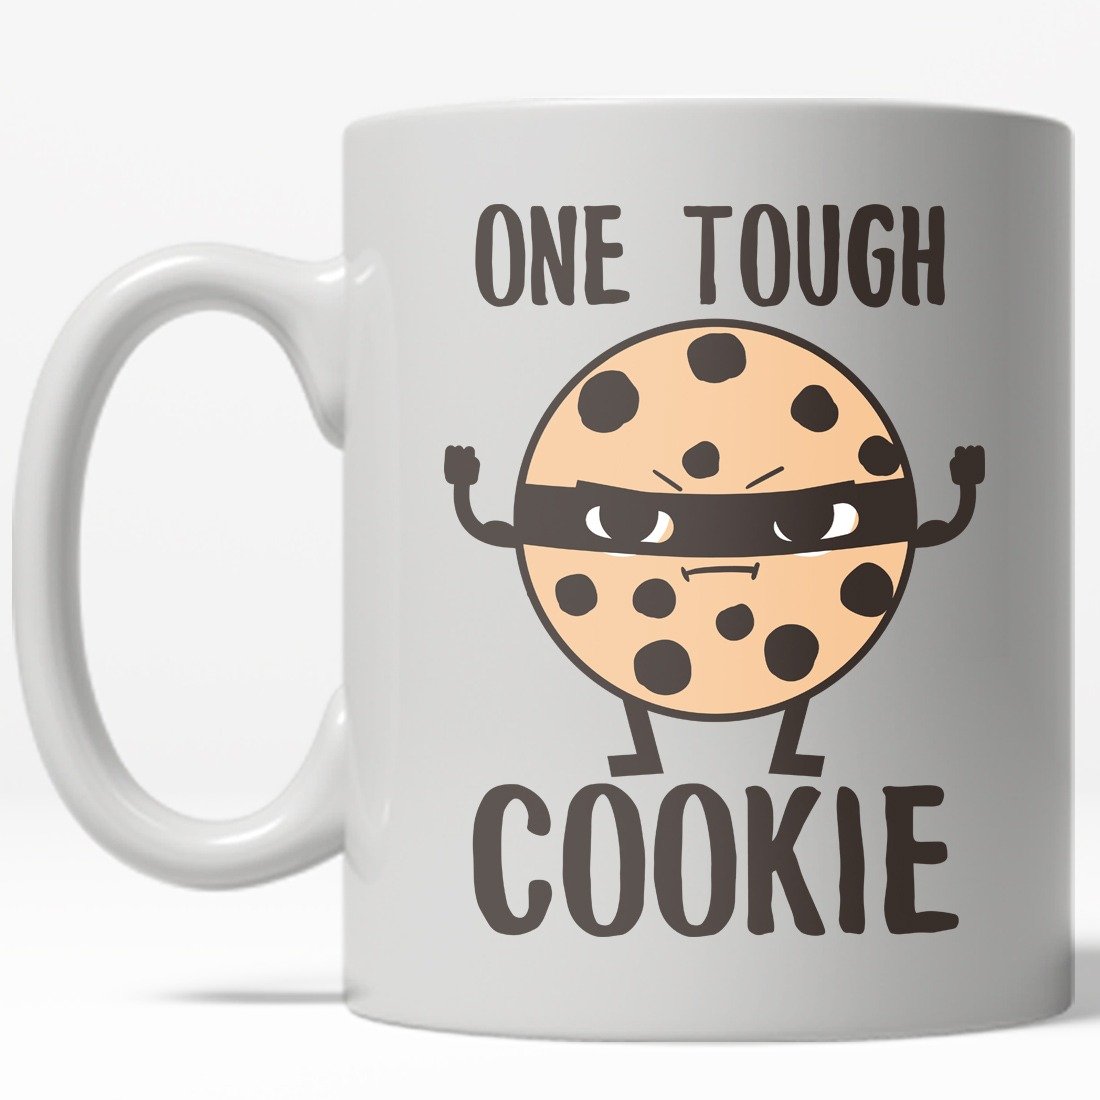 Crazy Dog Tshirts  One Tough Cookie Mug Funny Snacks Chocolate